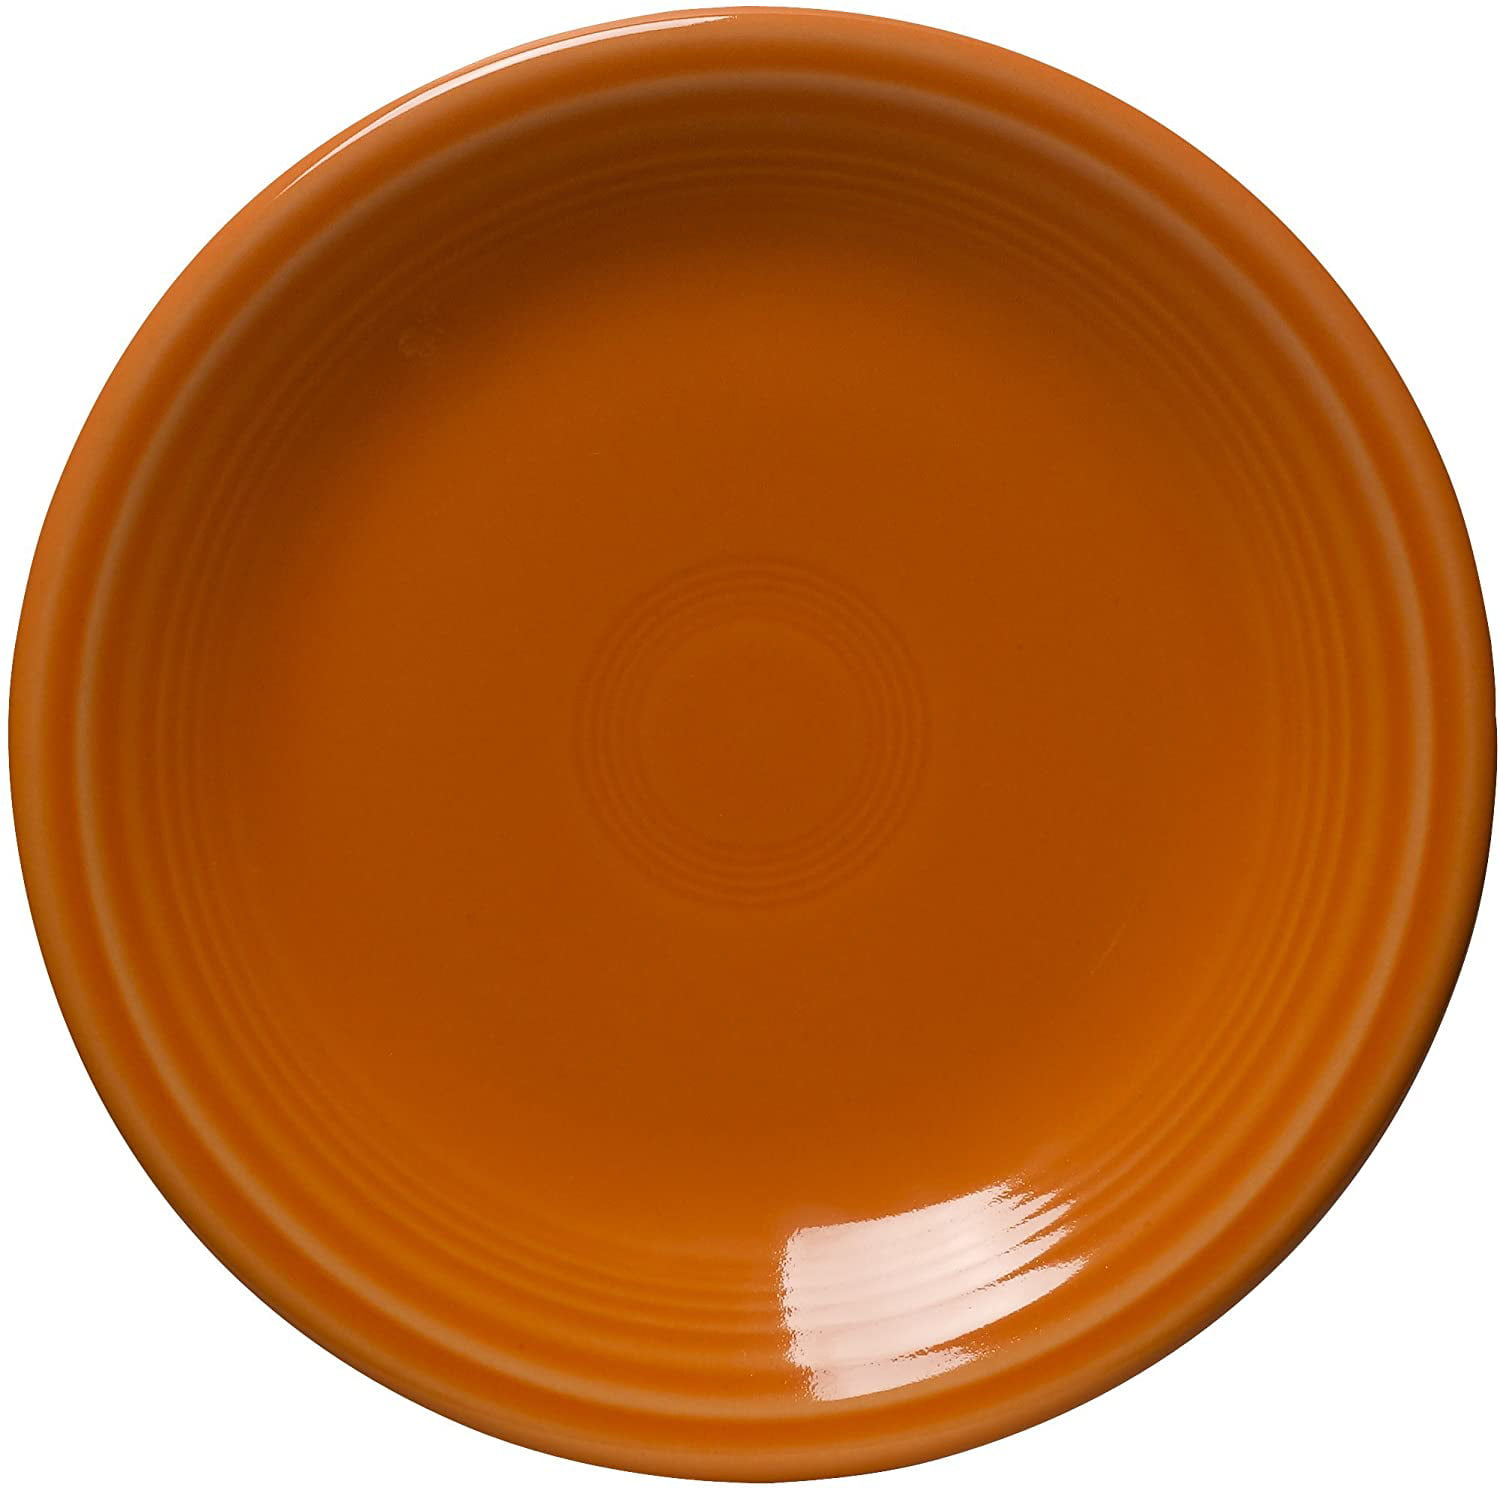 Original Bright Orange Color Dinner Serving Plate  by Homer Laughlin.